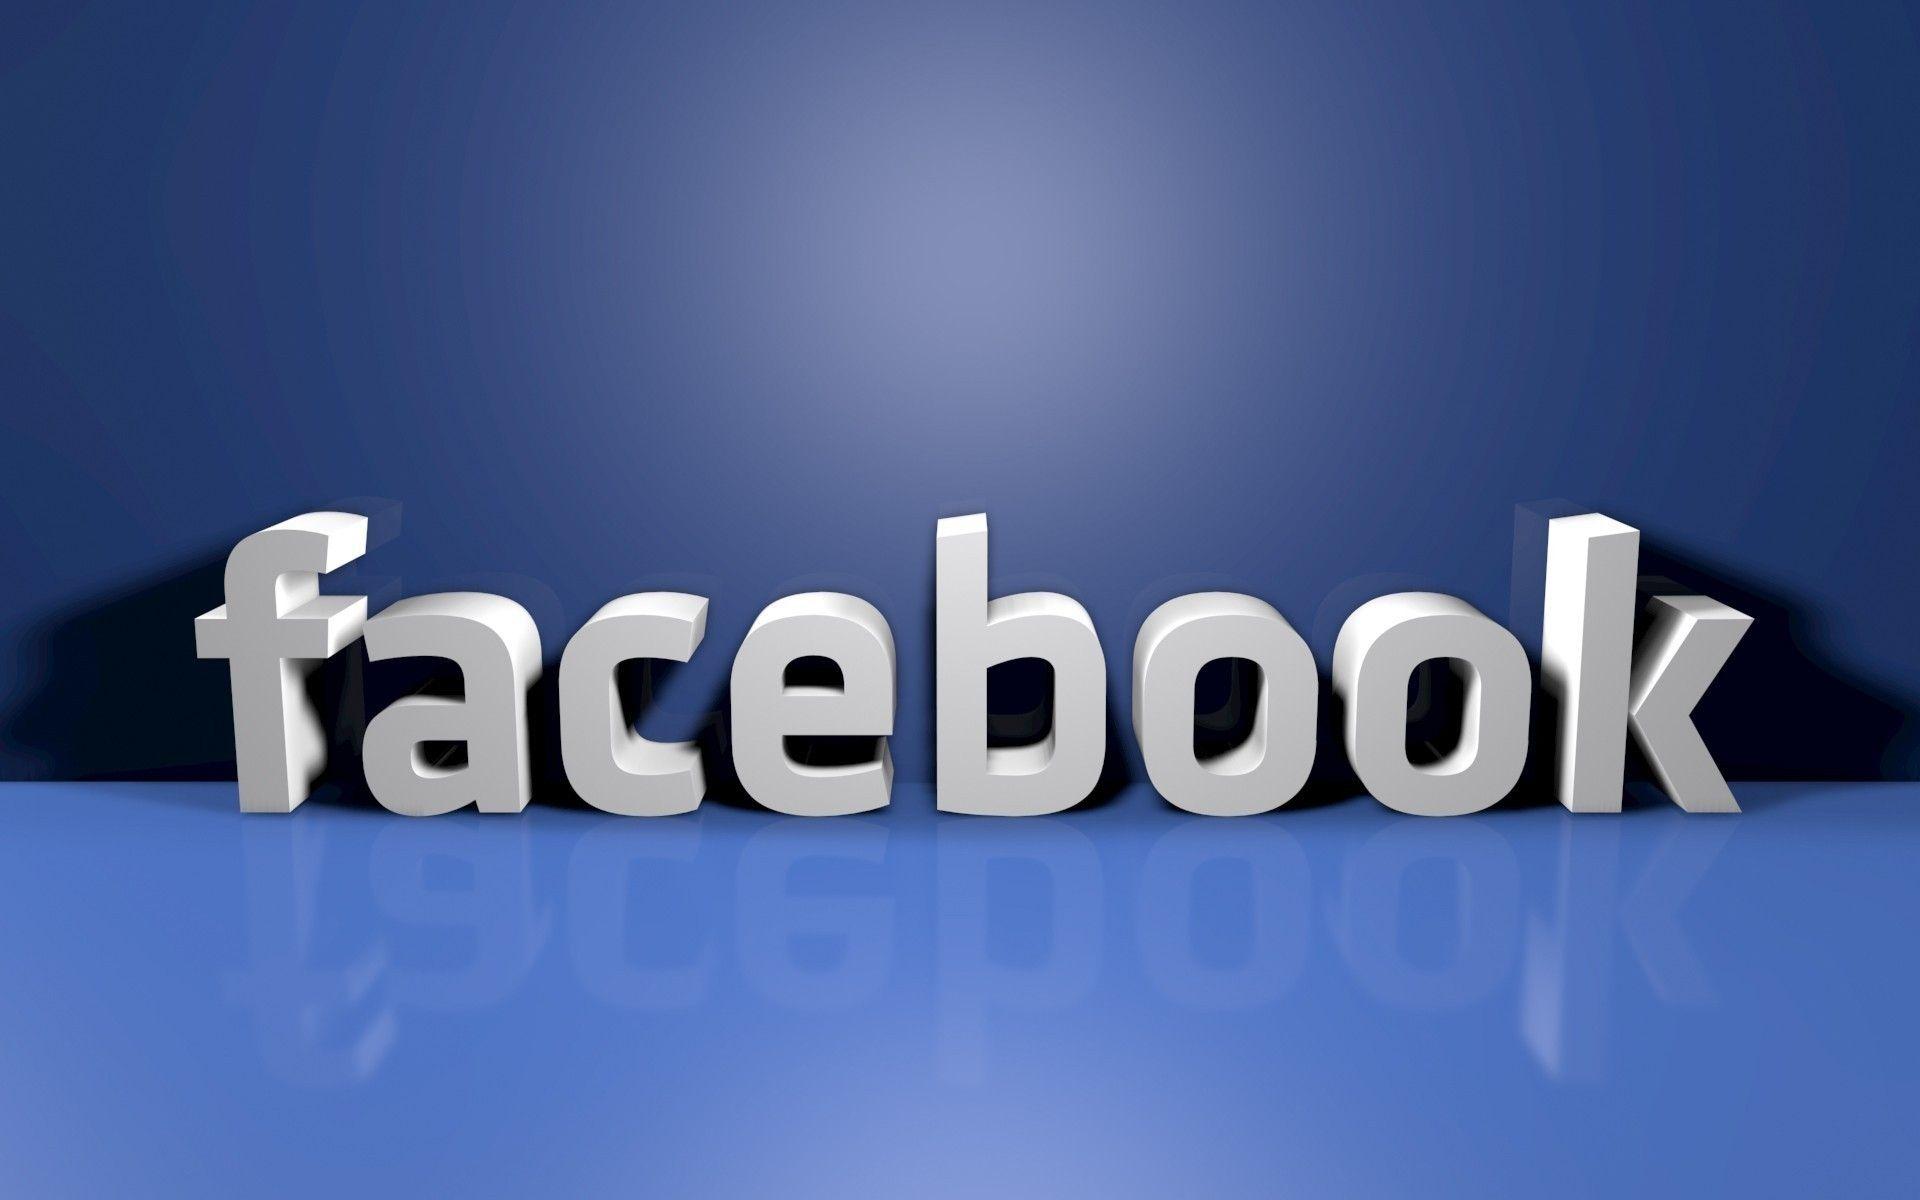 Facebook Logo 3D wallpaperd and abstract